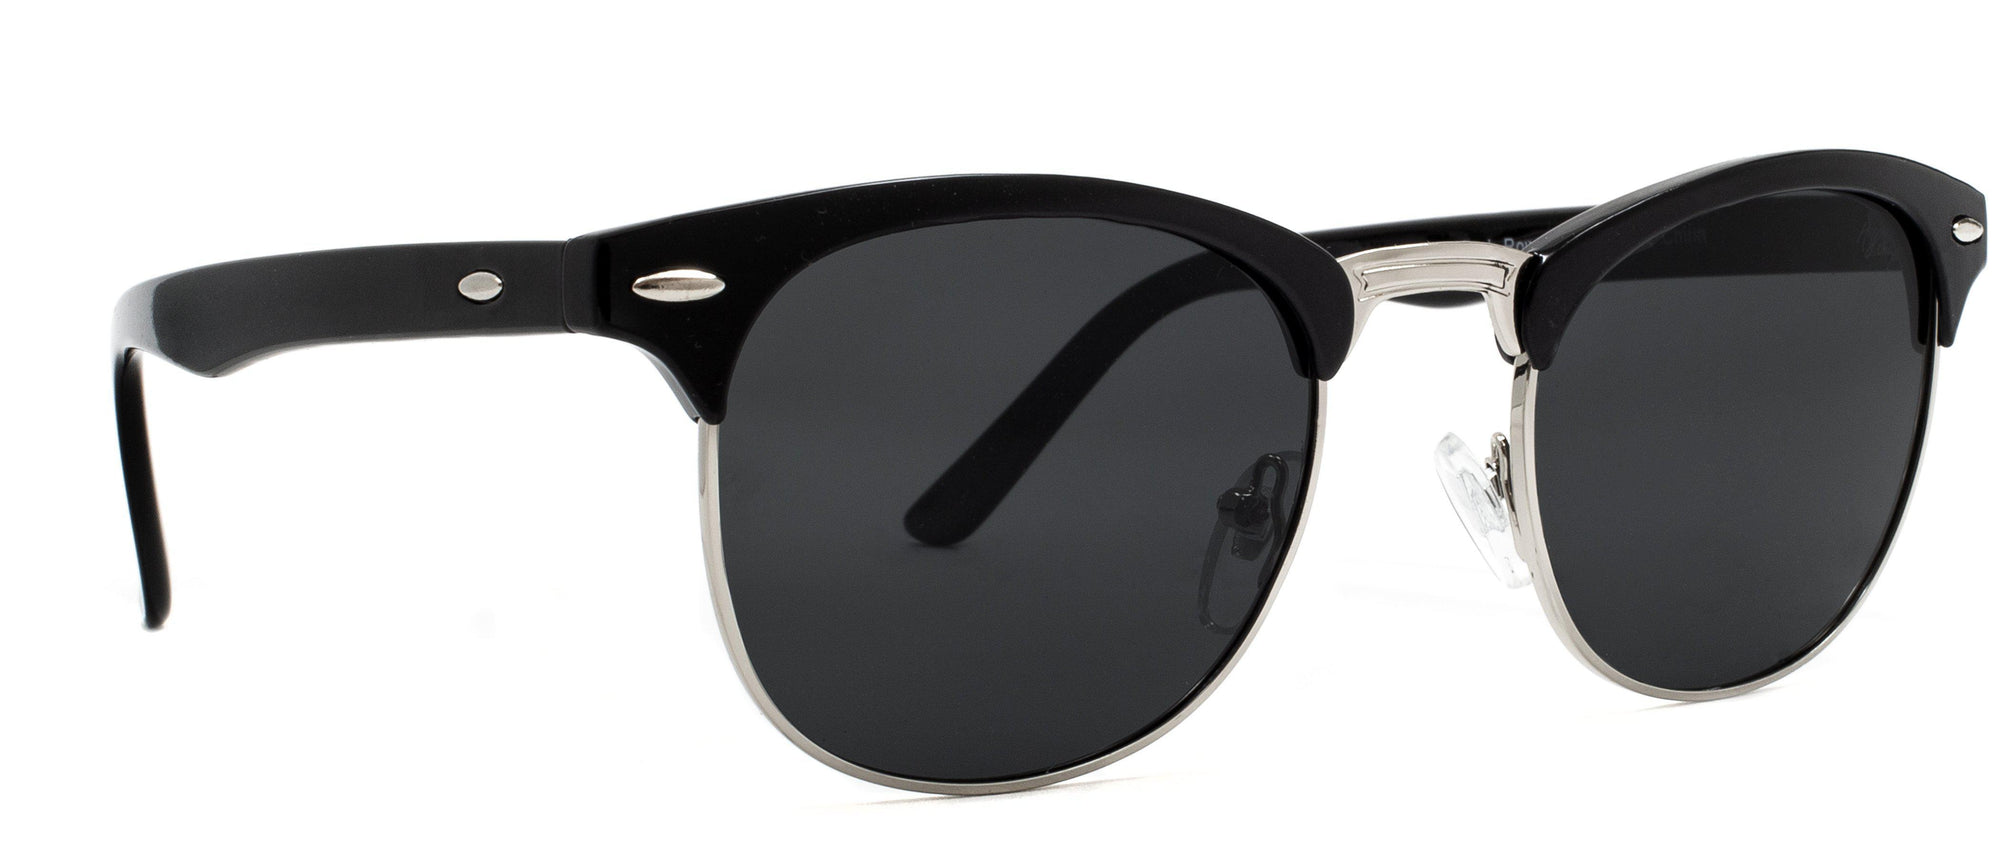 Park Row - Sunglasses NYS Collection Eyewear Silver/Black